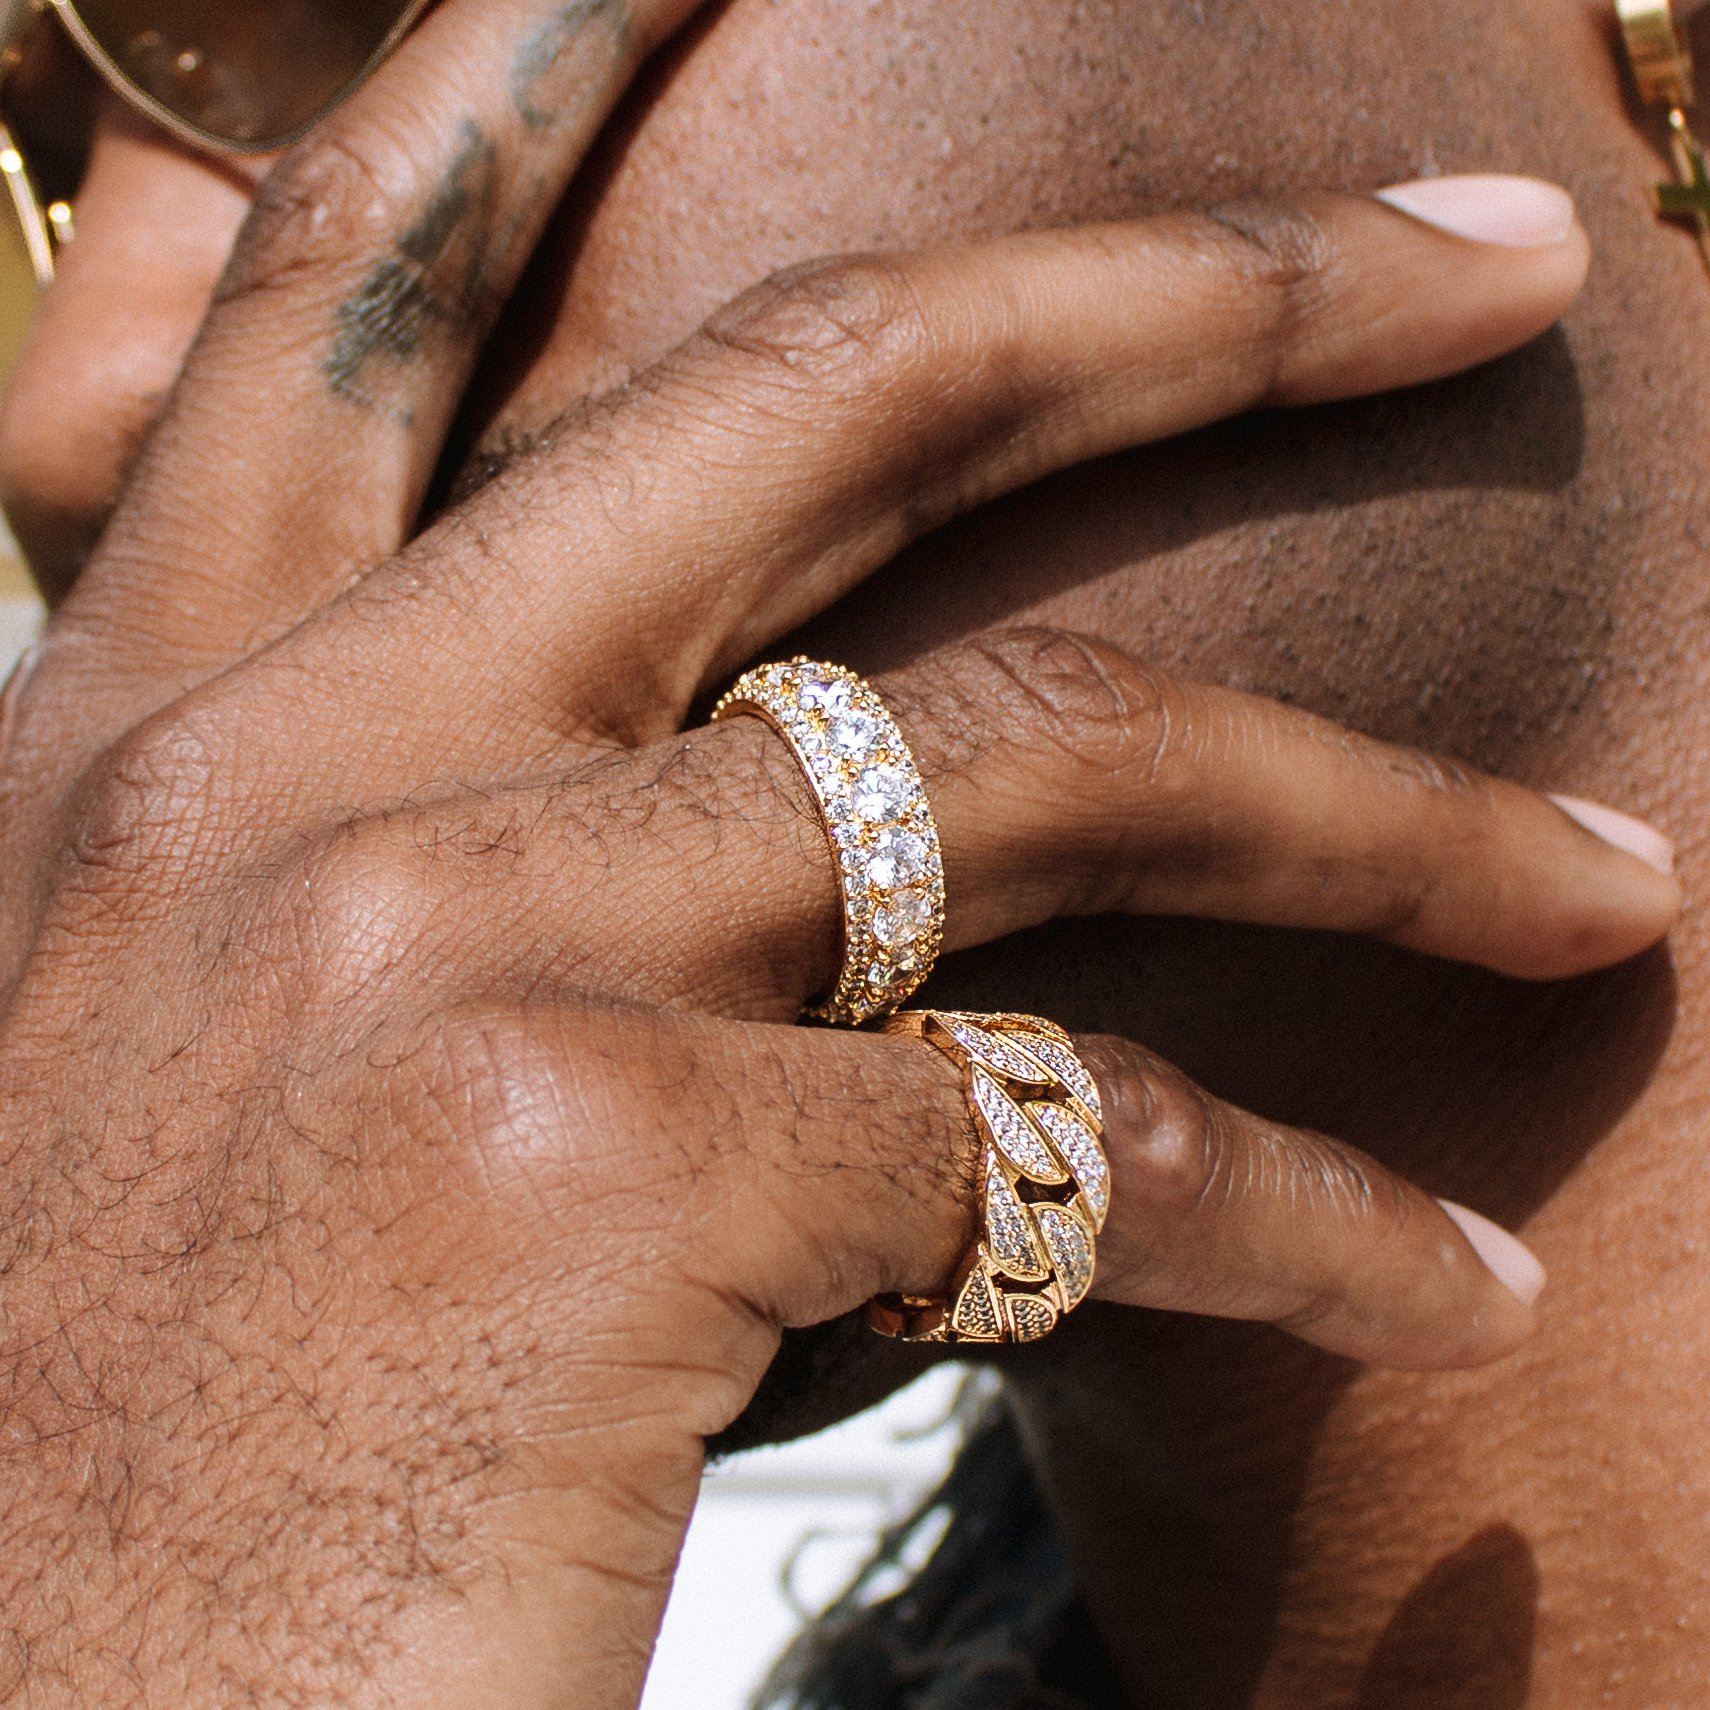 The Gold Gods Diamond Cuban Ring